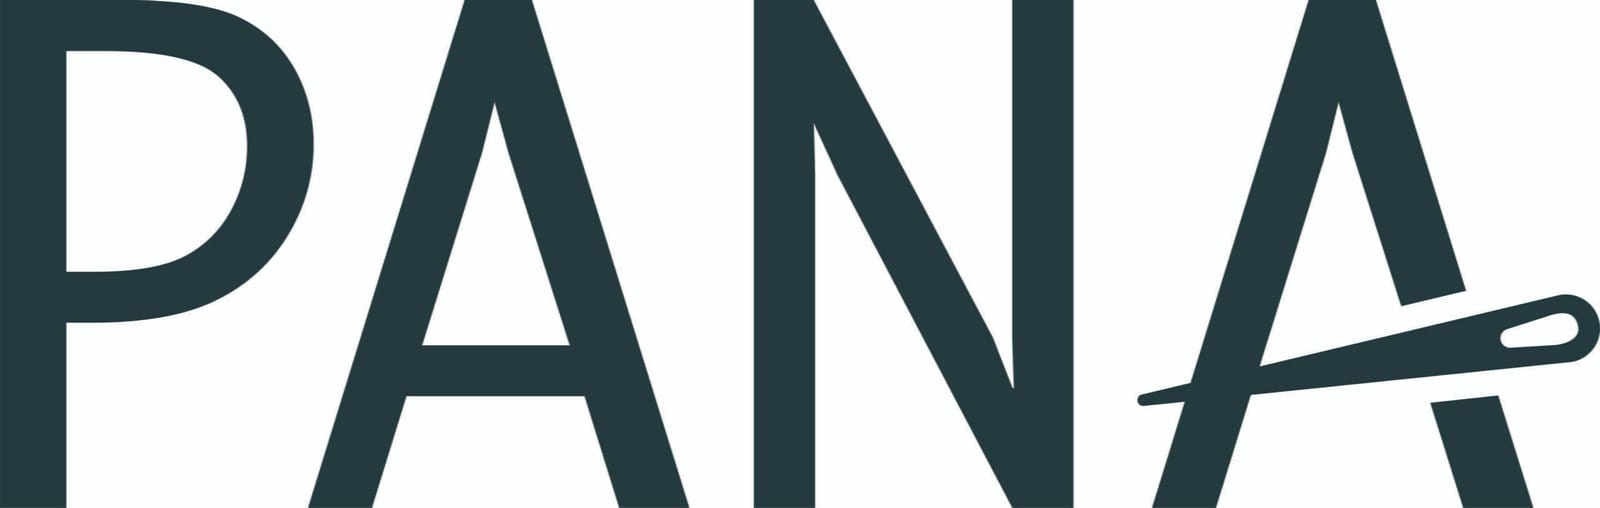 Pana-logo-CMYK-gr├n (002)